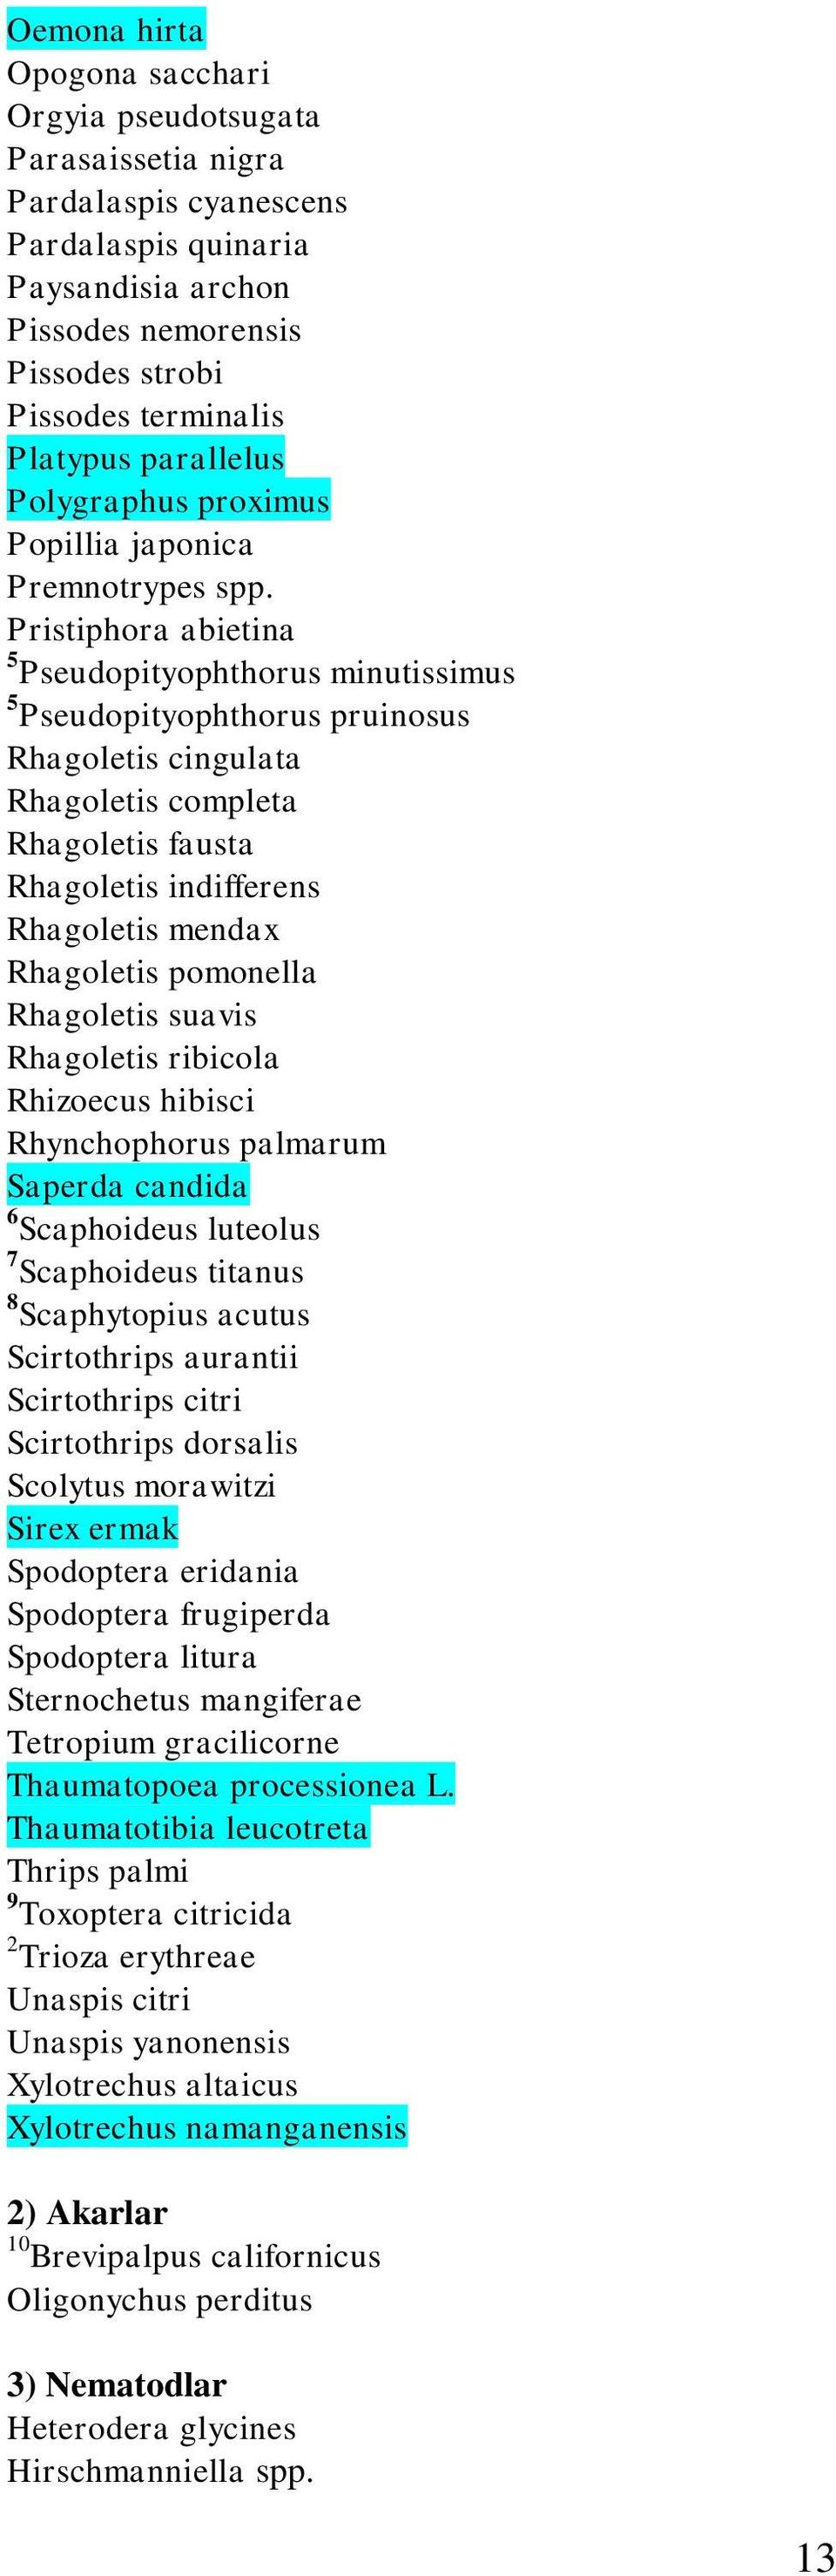 Pristiphora abietina 5 Pseudopityophthorus minutissimus 5 Pseudopityophthorus pruinosus Rhagoletis cingulata Rhagoletis completa Rhagoletis fausta Rhagoletis indifferens Rhagoletis mendax Rhagoletis